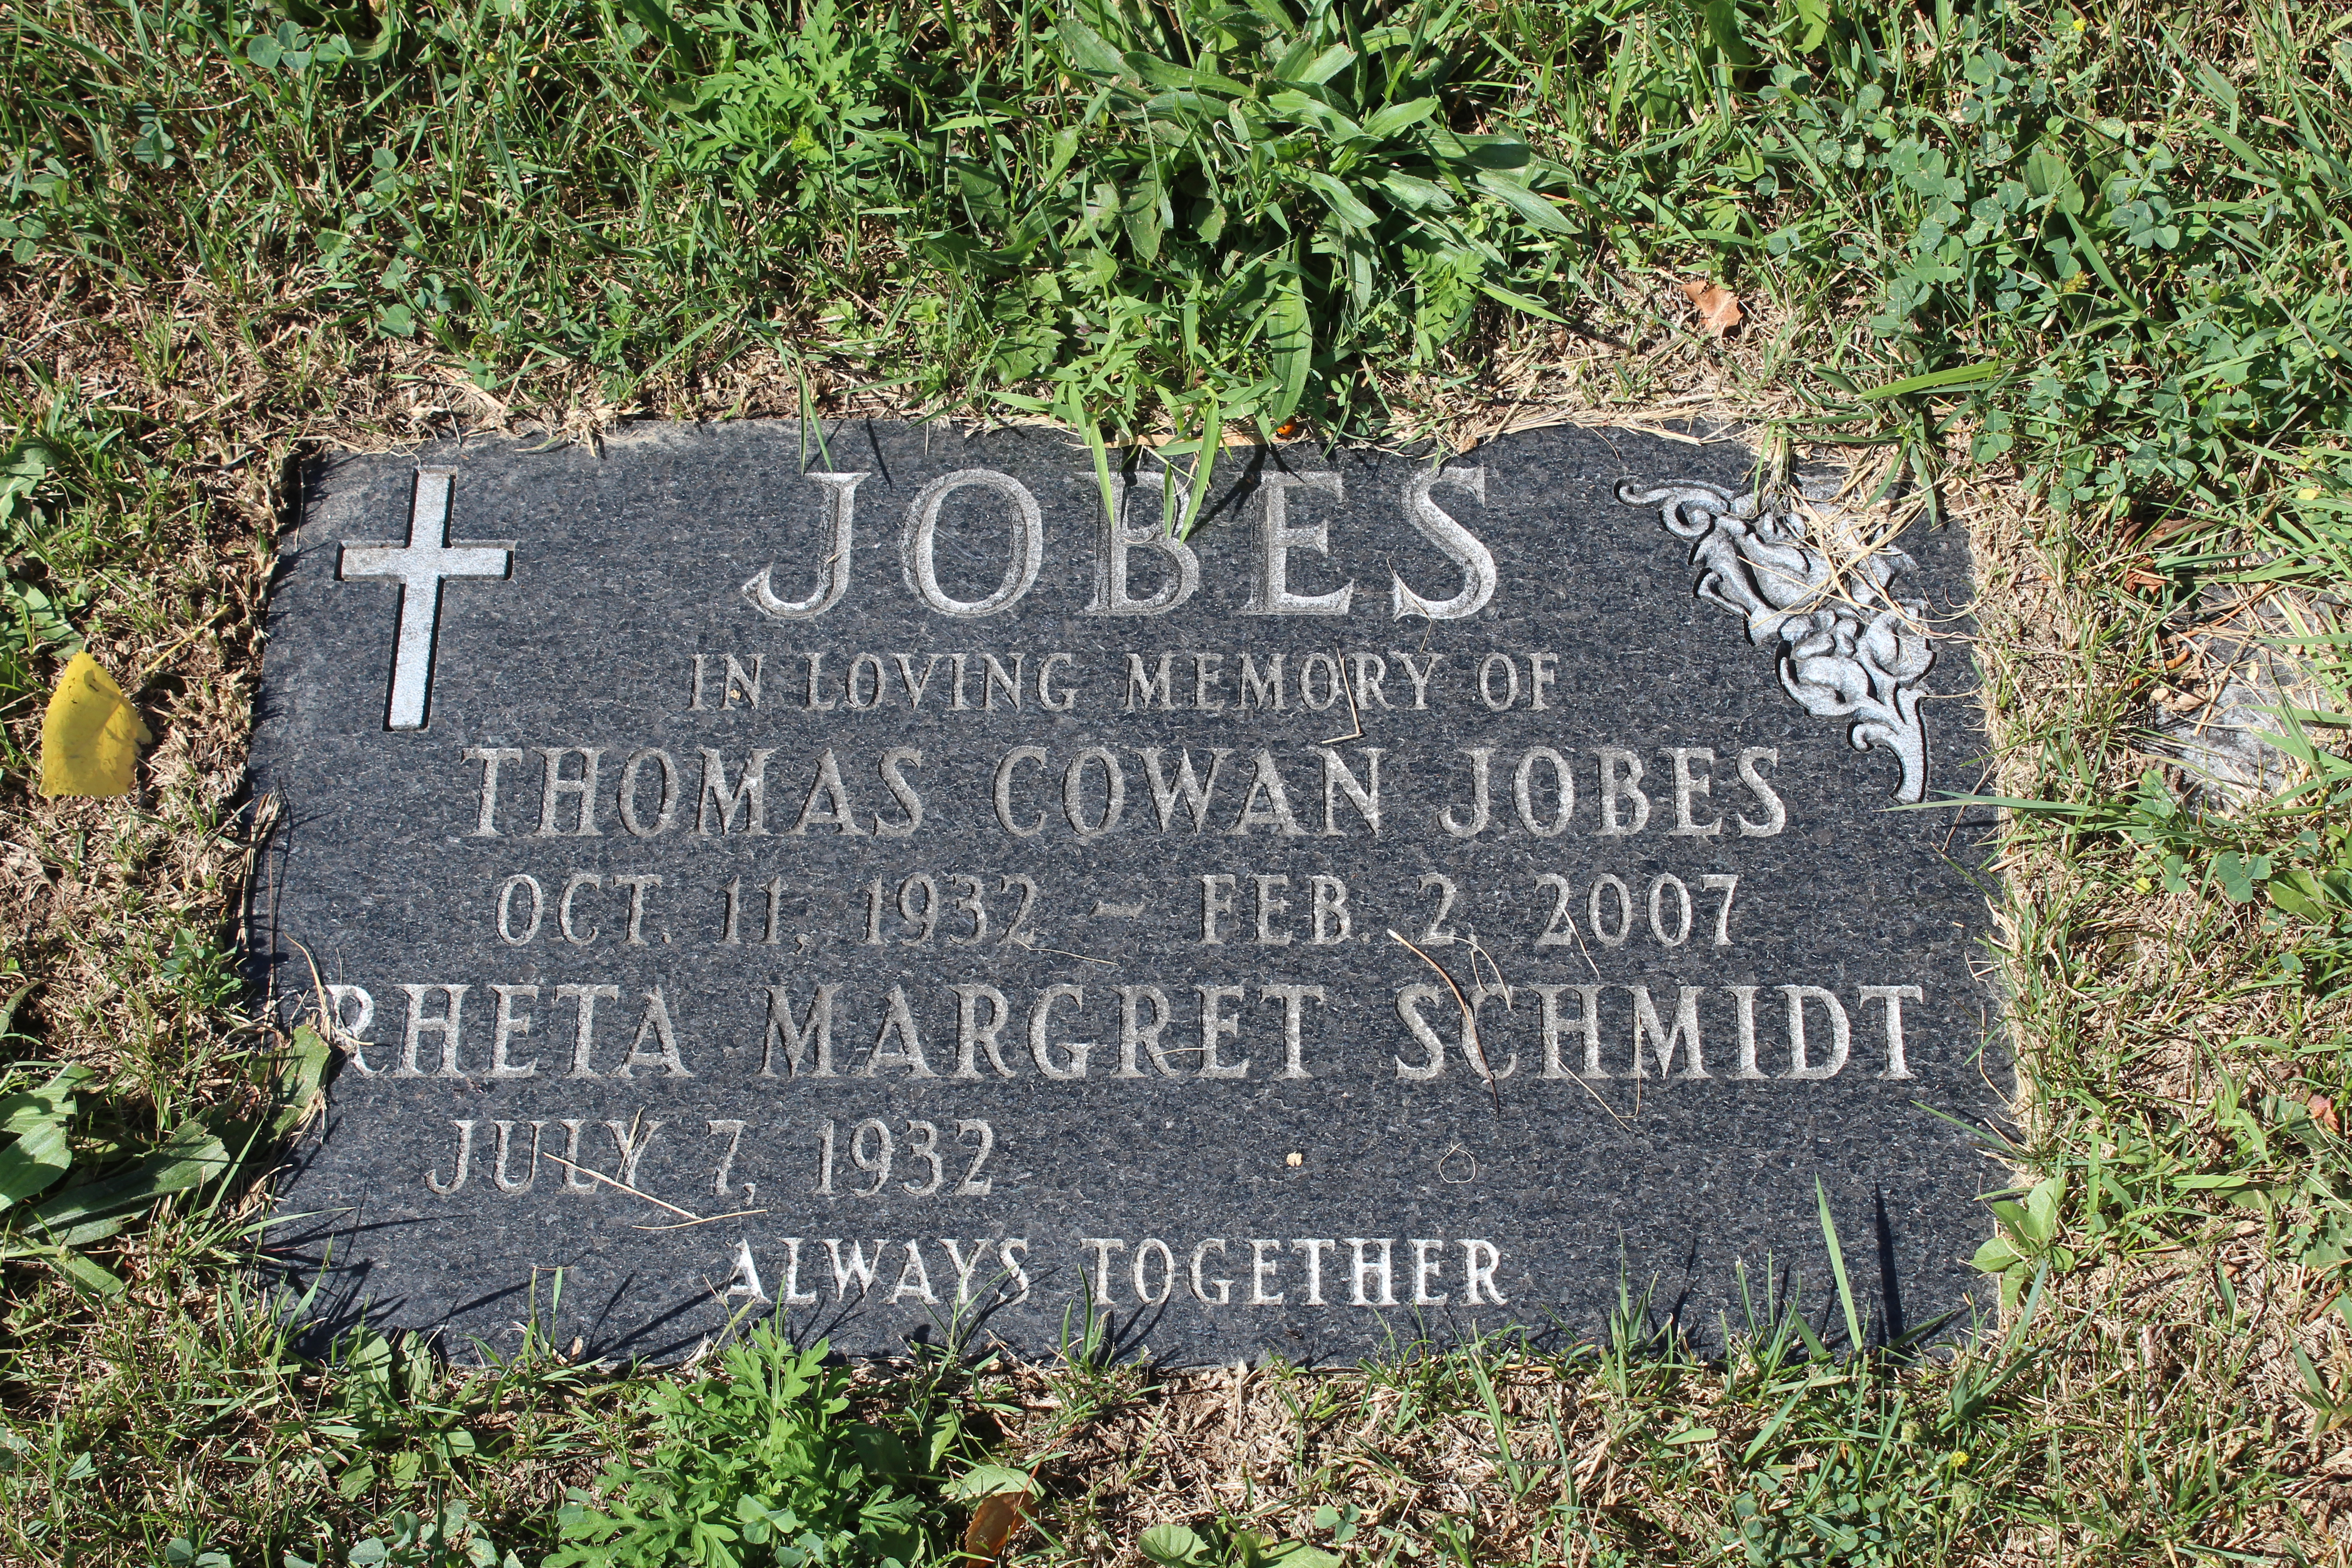 Thomas Jobes and Rheta Margaret Schmidt